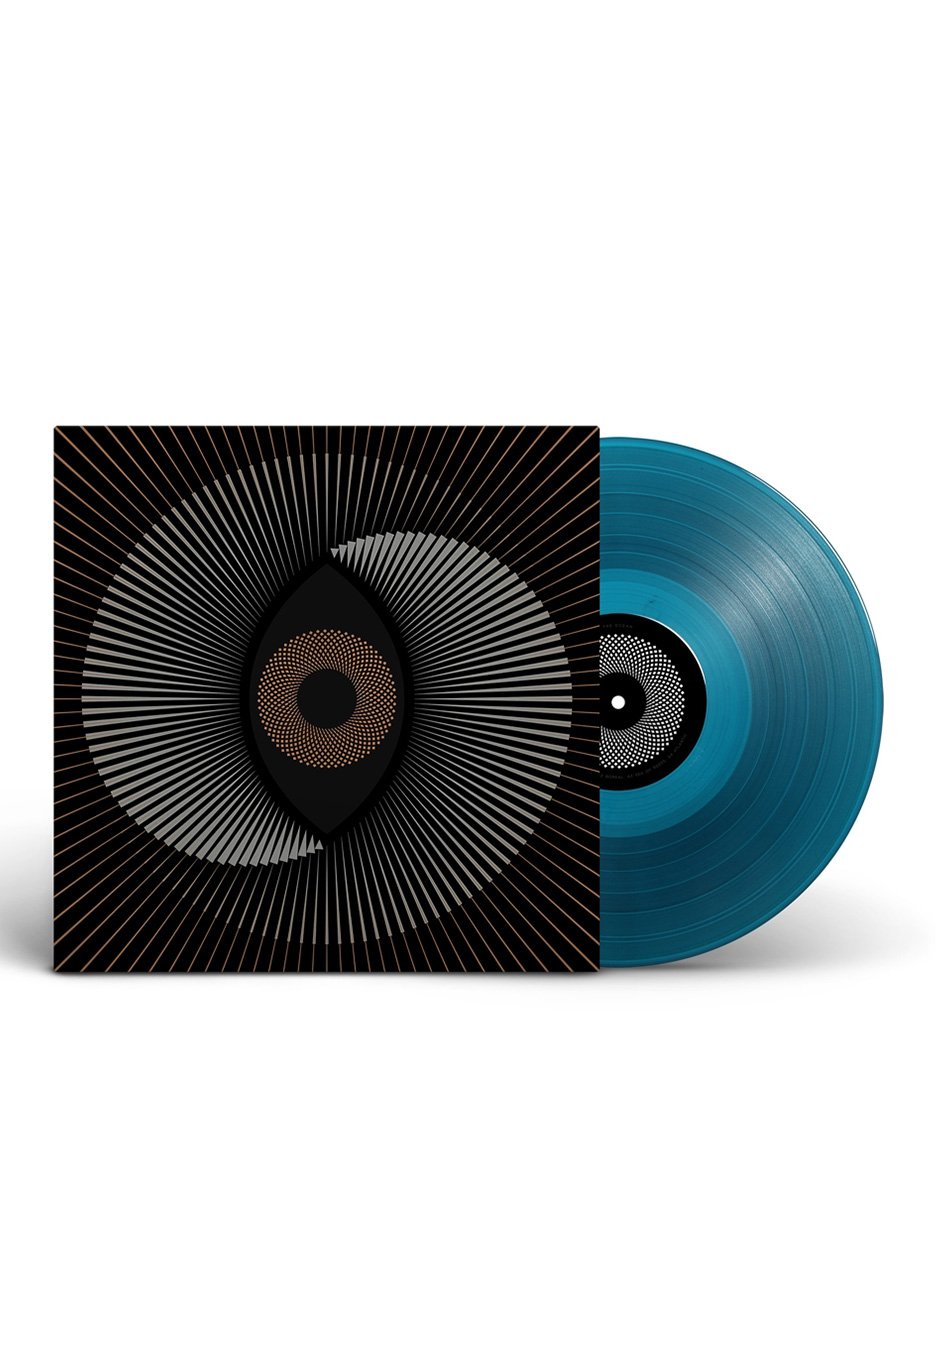 The Ocean - Holocene Instrumental Ltd. Transparent Blue - Colored Vinyl